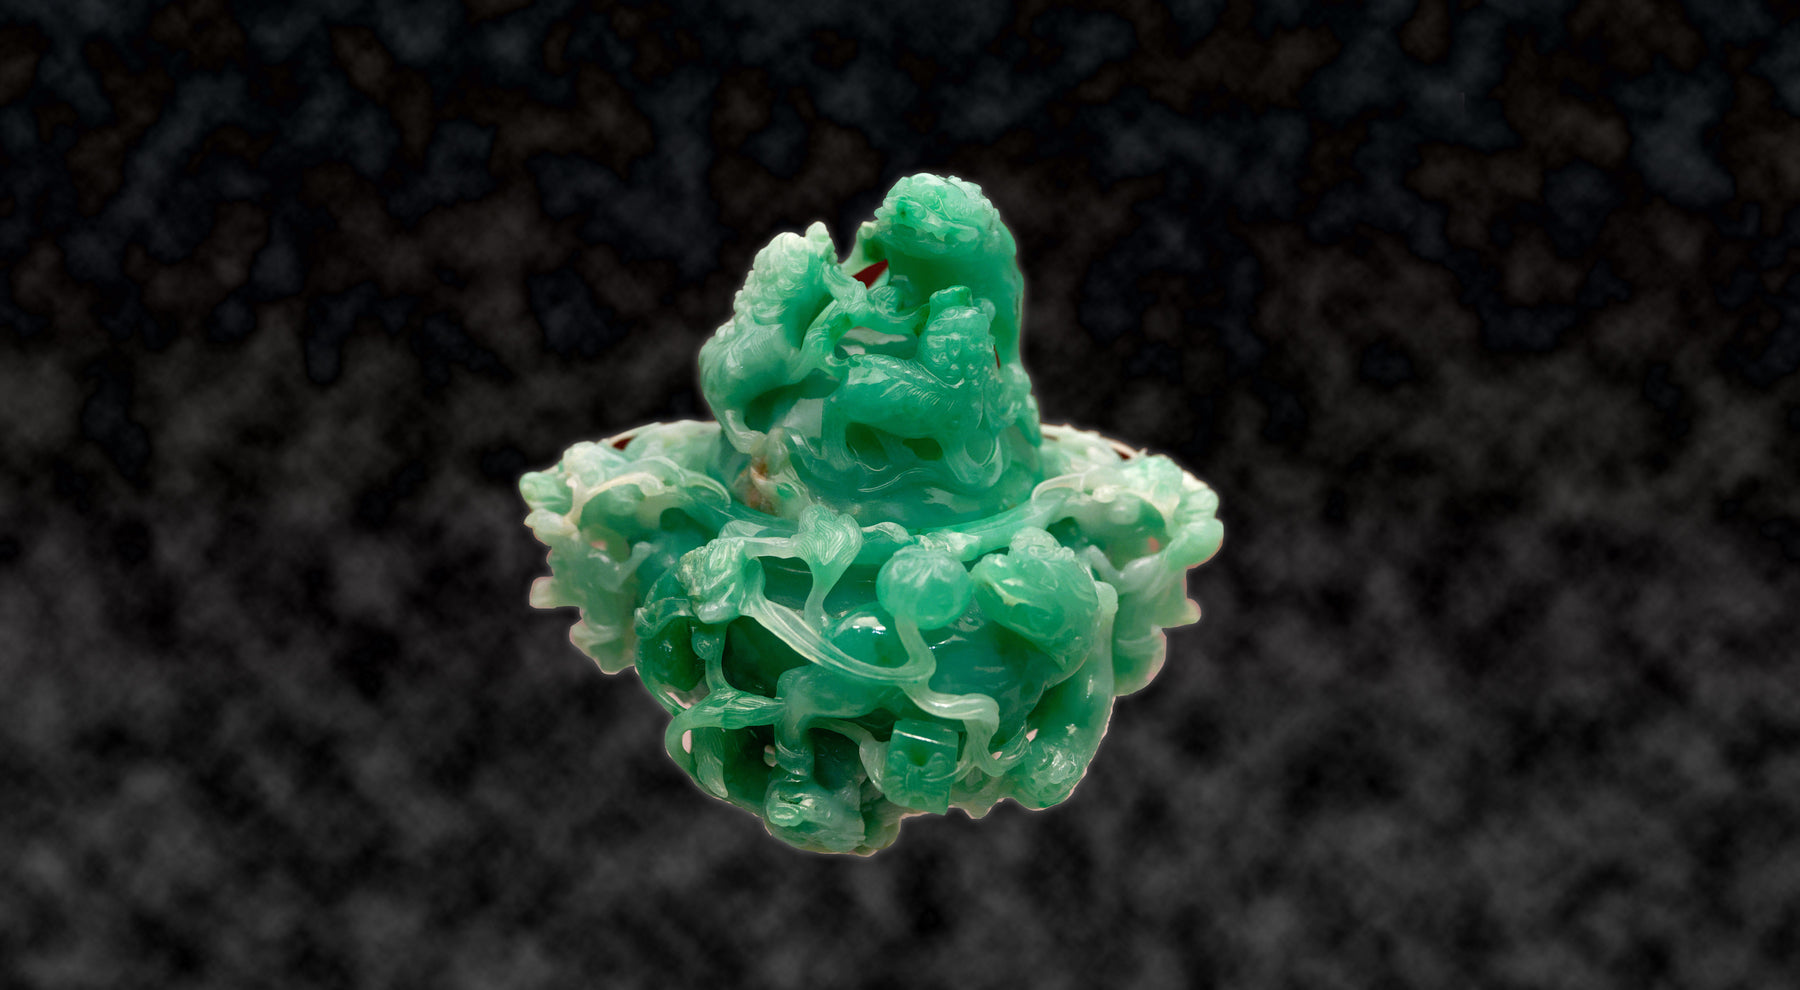 Jade jadeite nephrite green stone metaphysical healing properties & meaning